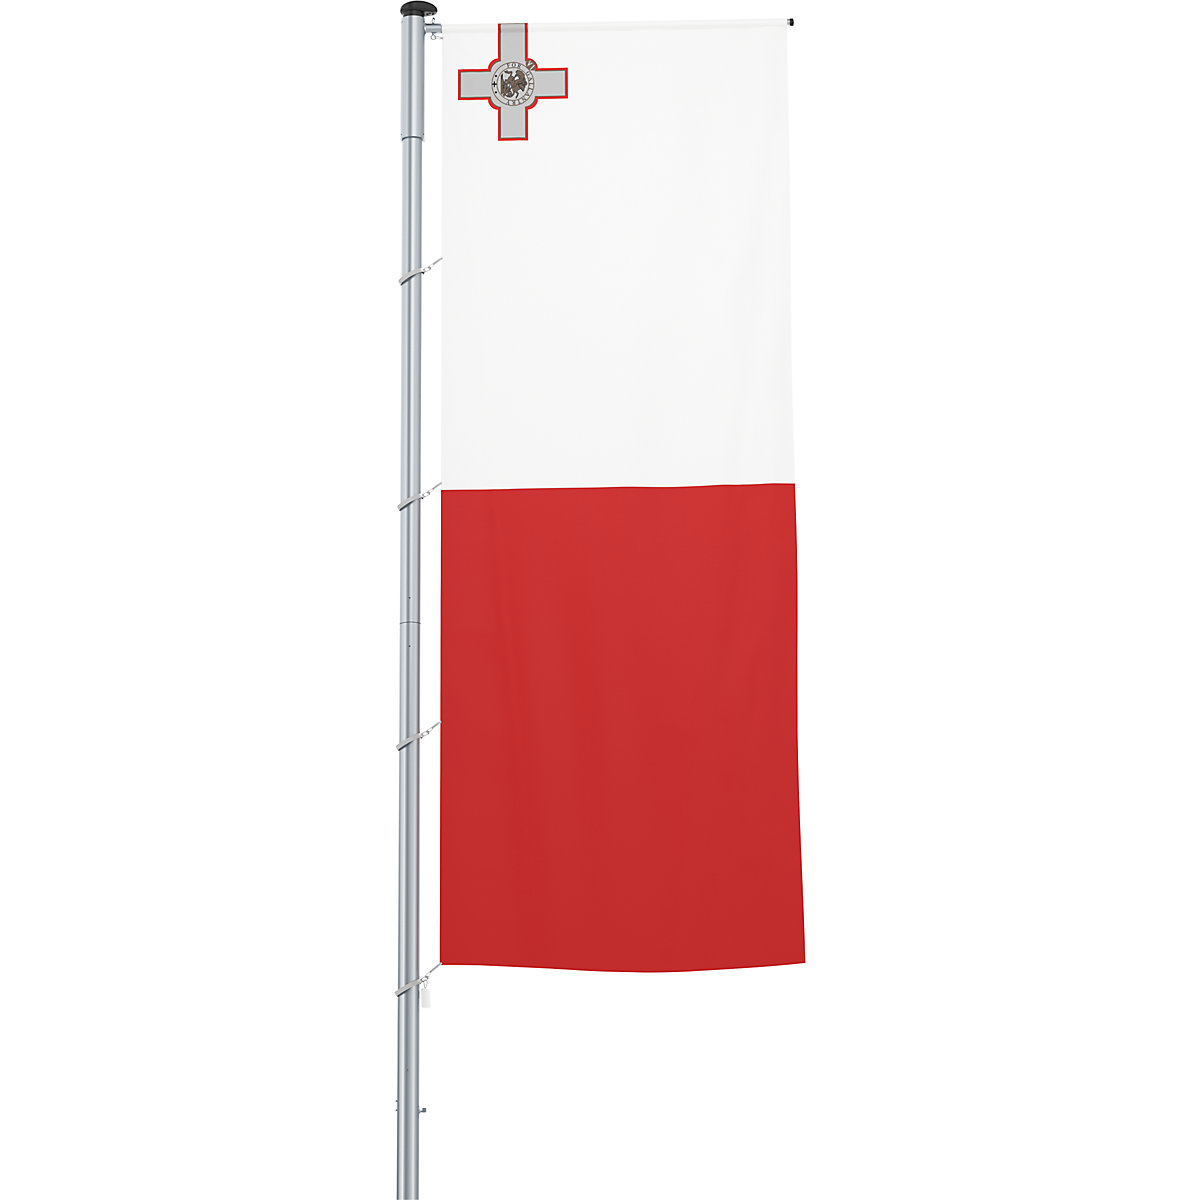 Mastvlag/landvlag – Mannus, formaat 1,2 x 3 m, Malta-18